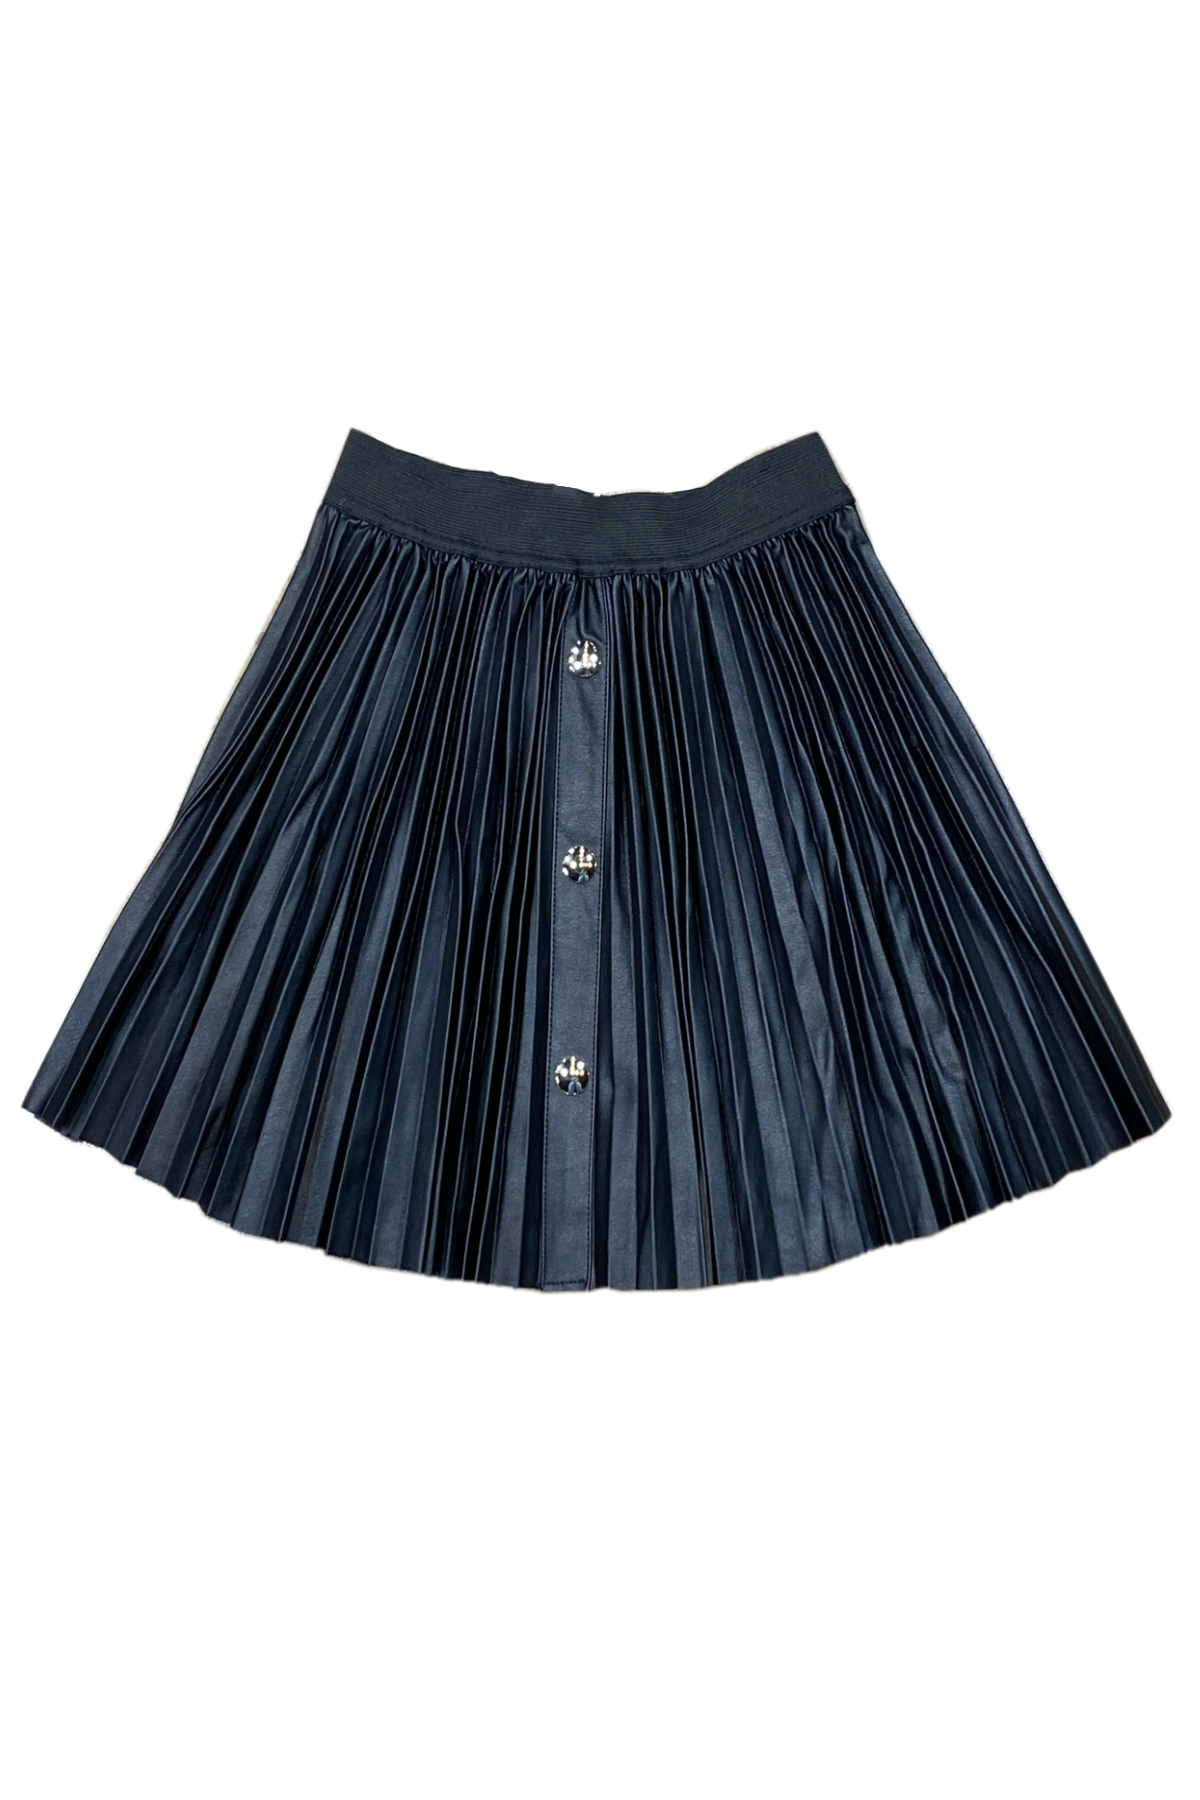 Hannah Banana - Pleated Faux Leather Mini Skirt w/ Faux Snaps - Black